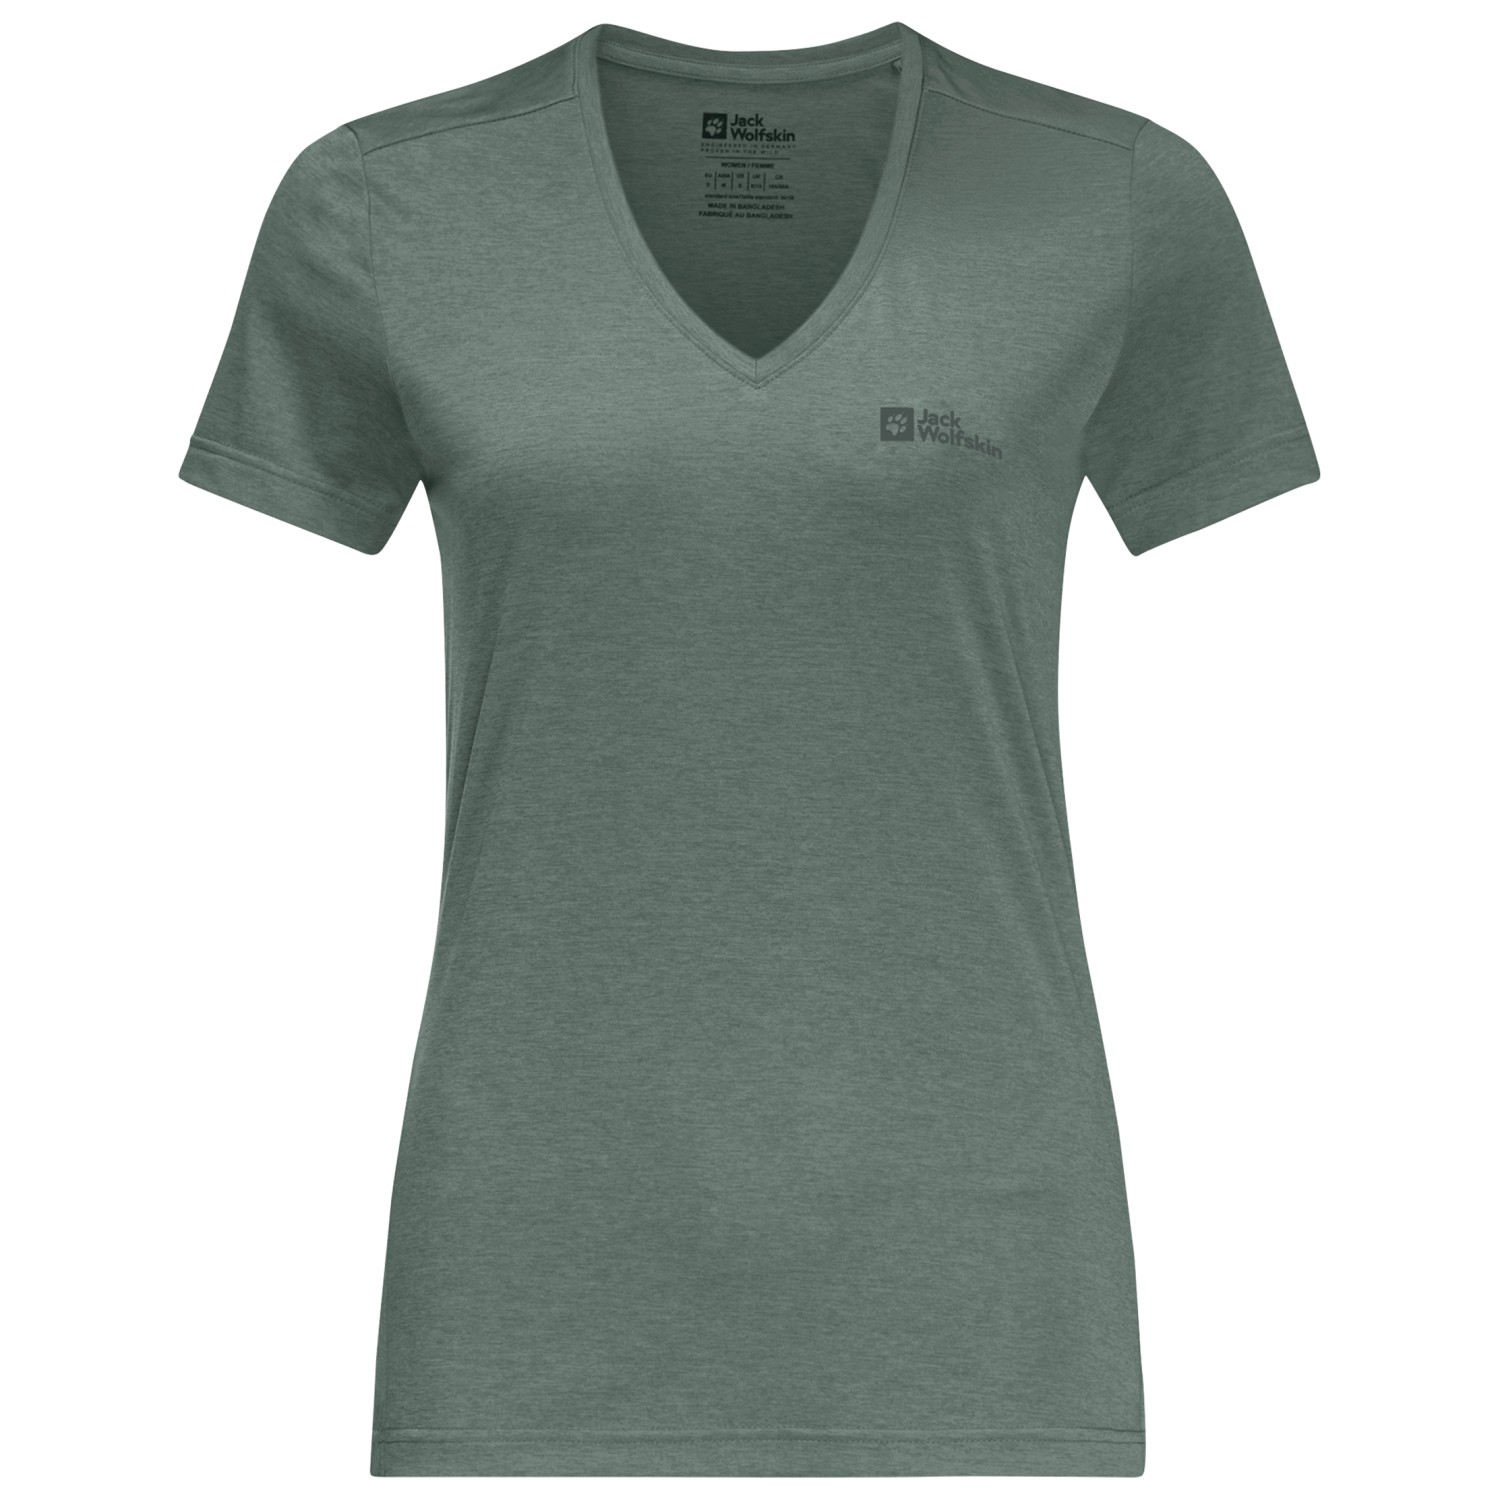 Функциональная рубашка Jack Wolfskin Women's Crosstrail Tomen, цвет Hedge Green цена и фото